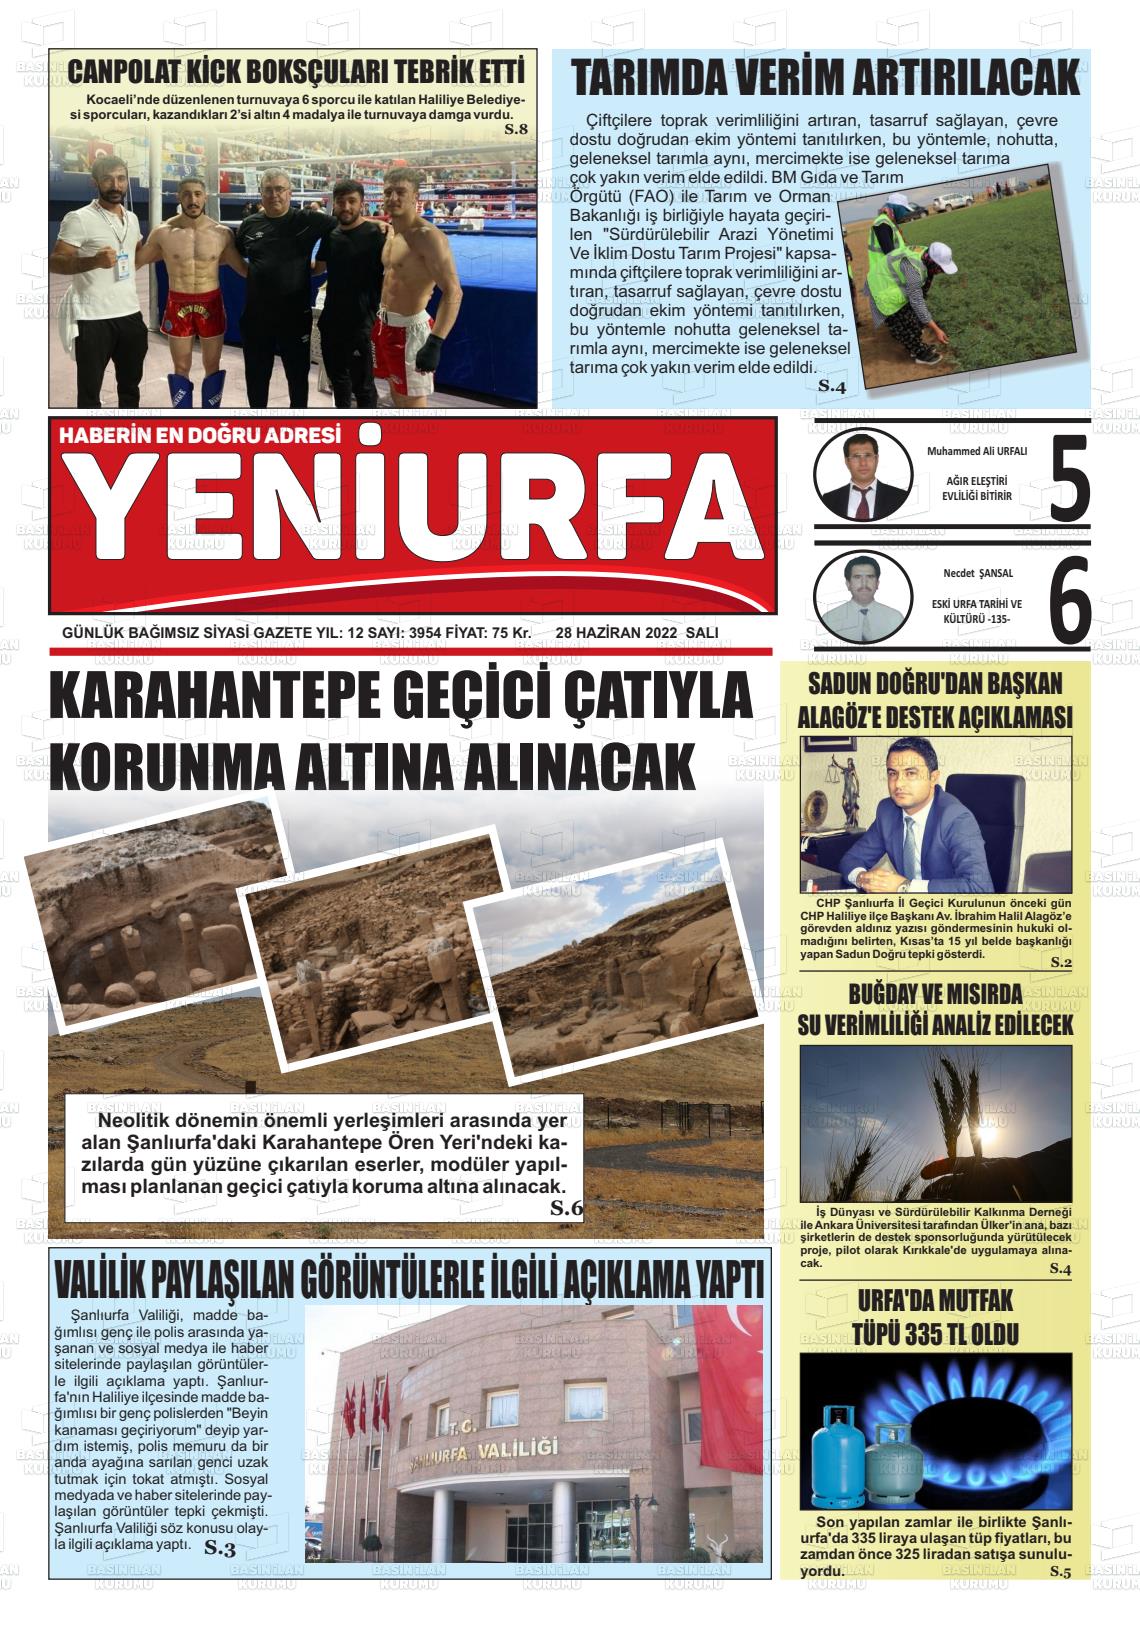 28 Haziran 2022 Yeni Urfa Gazete Manşeti